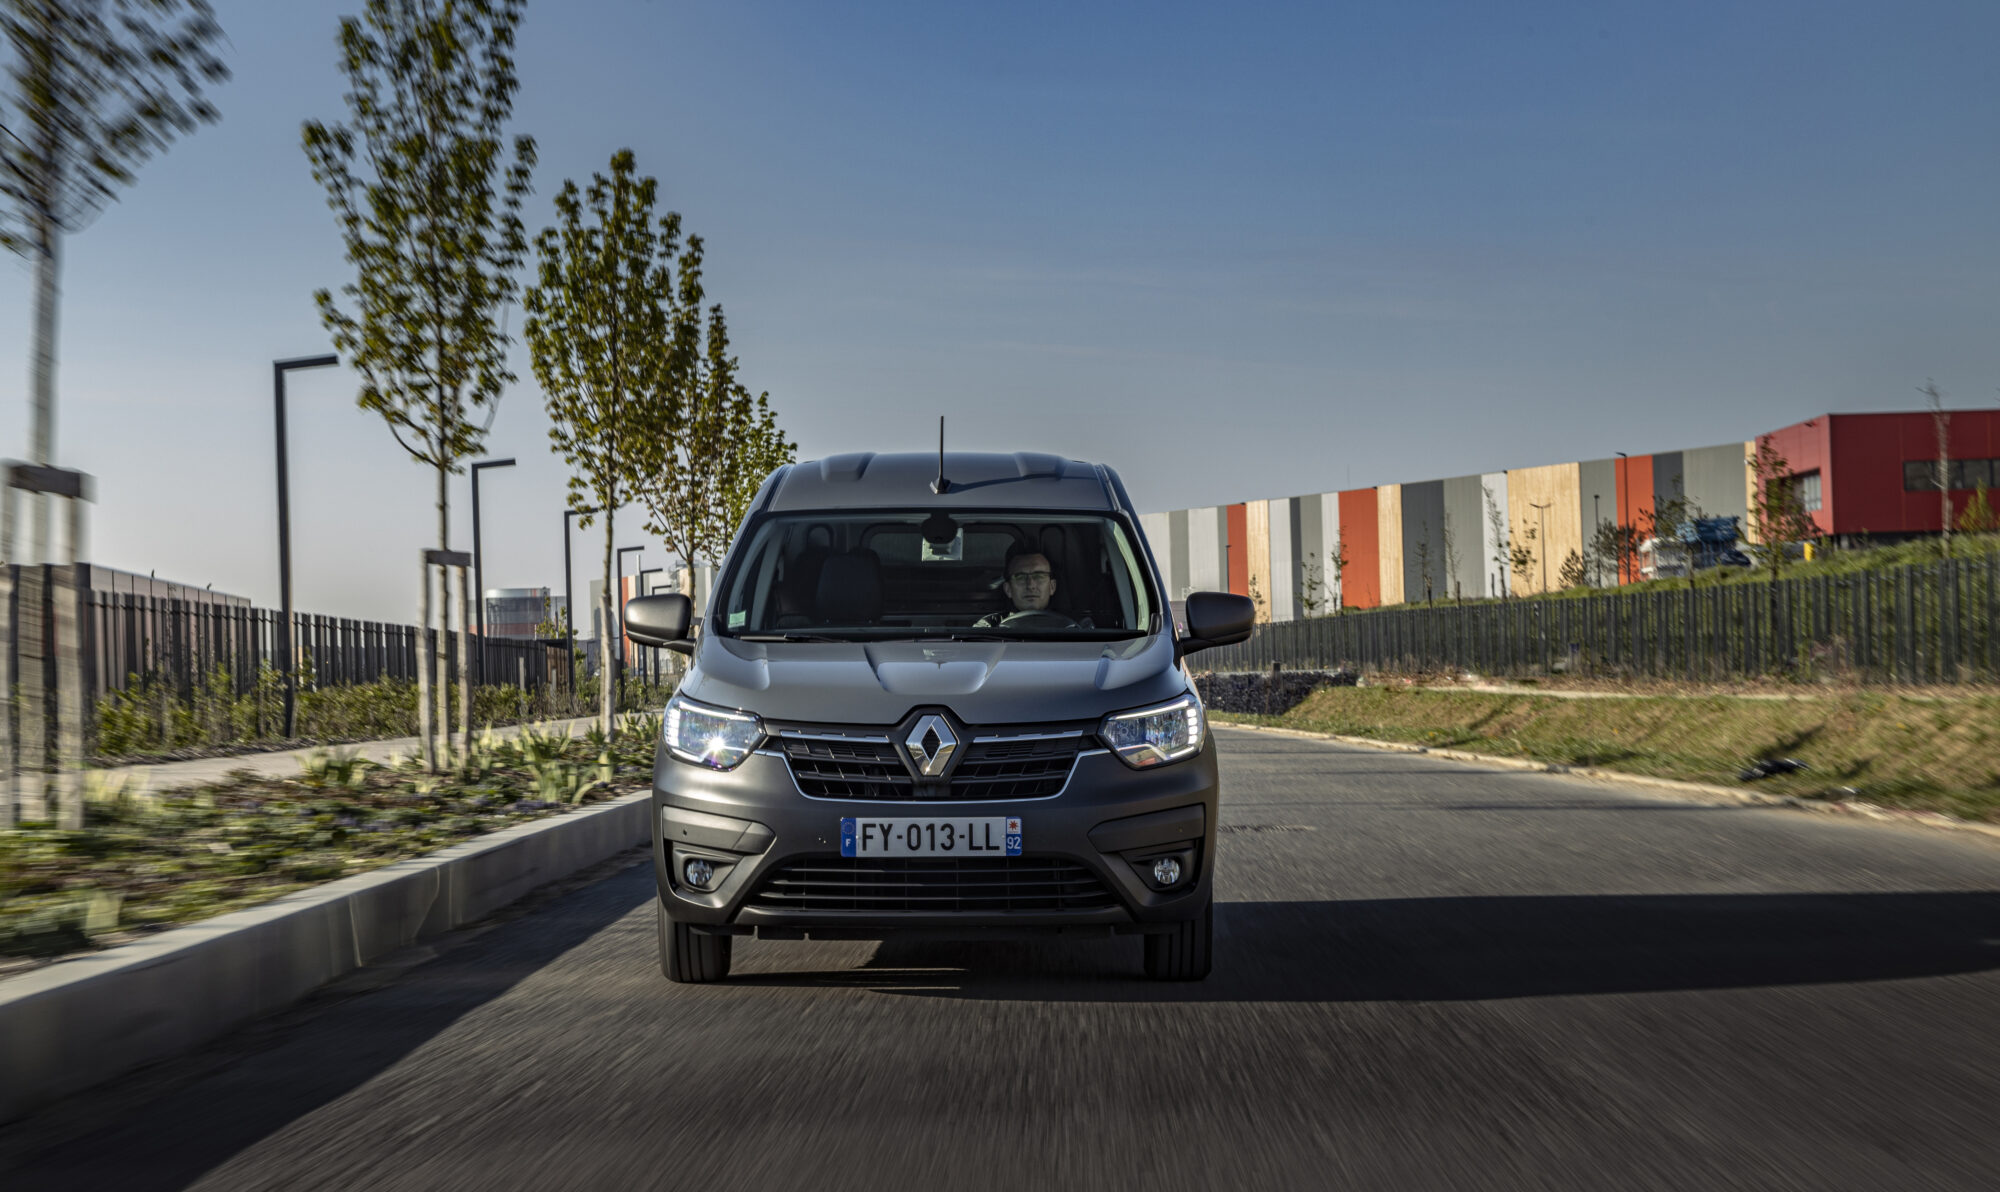 2021 - New Renault Express Van - Tests drive